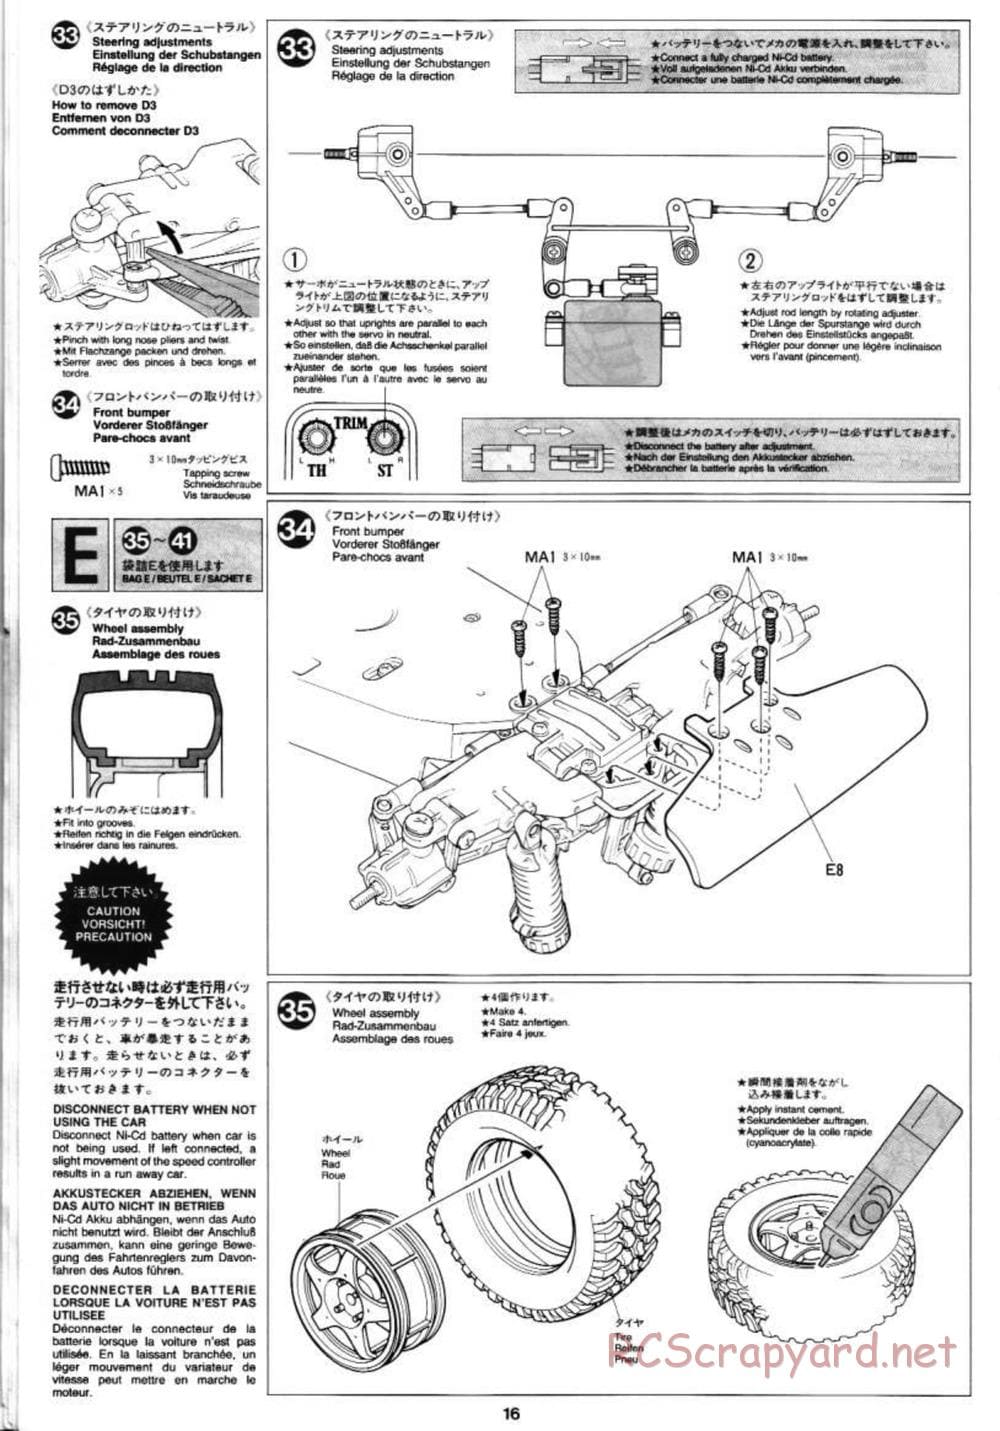 Tamiya - Blazing Star Chassis - Manual - Page 16